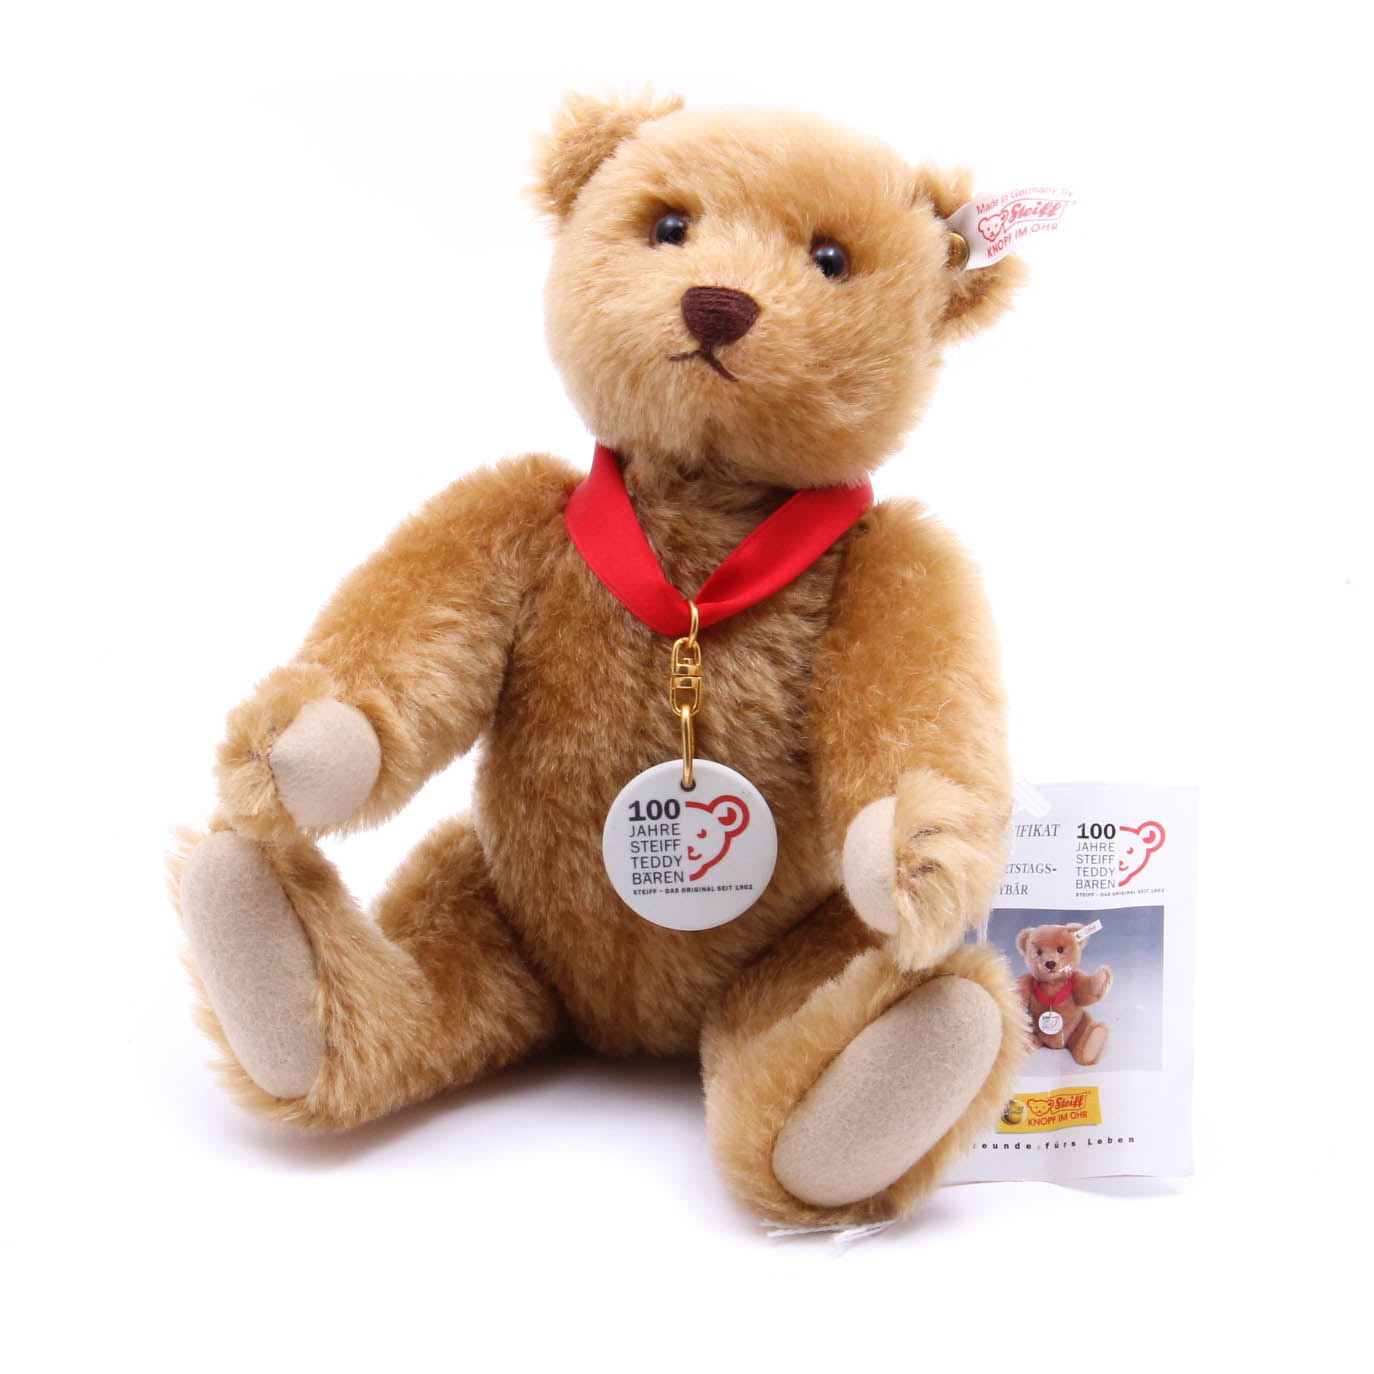 100th anniversary teddy bear 2002